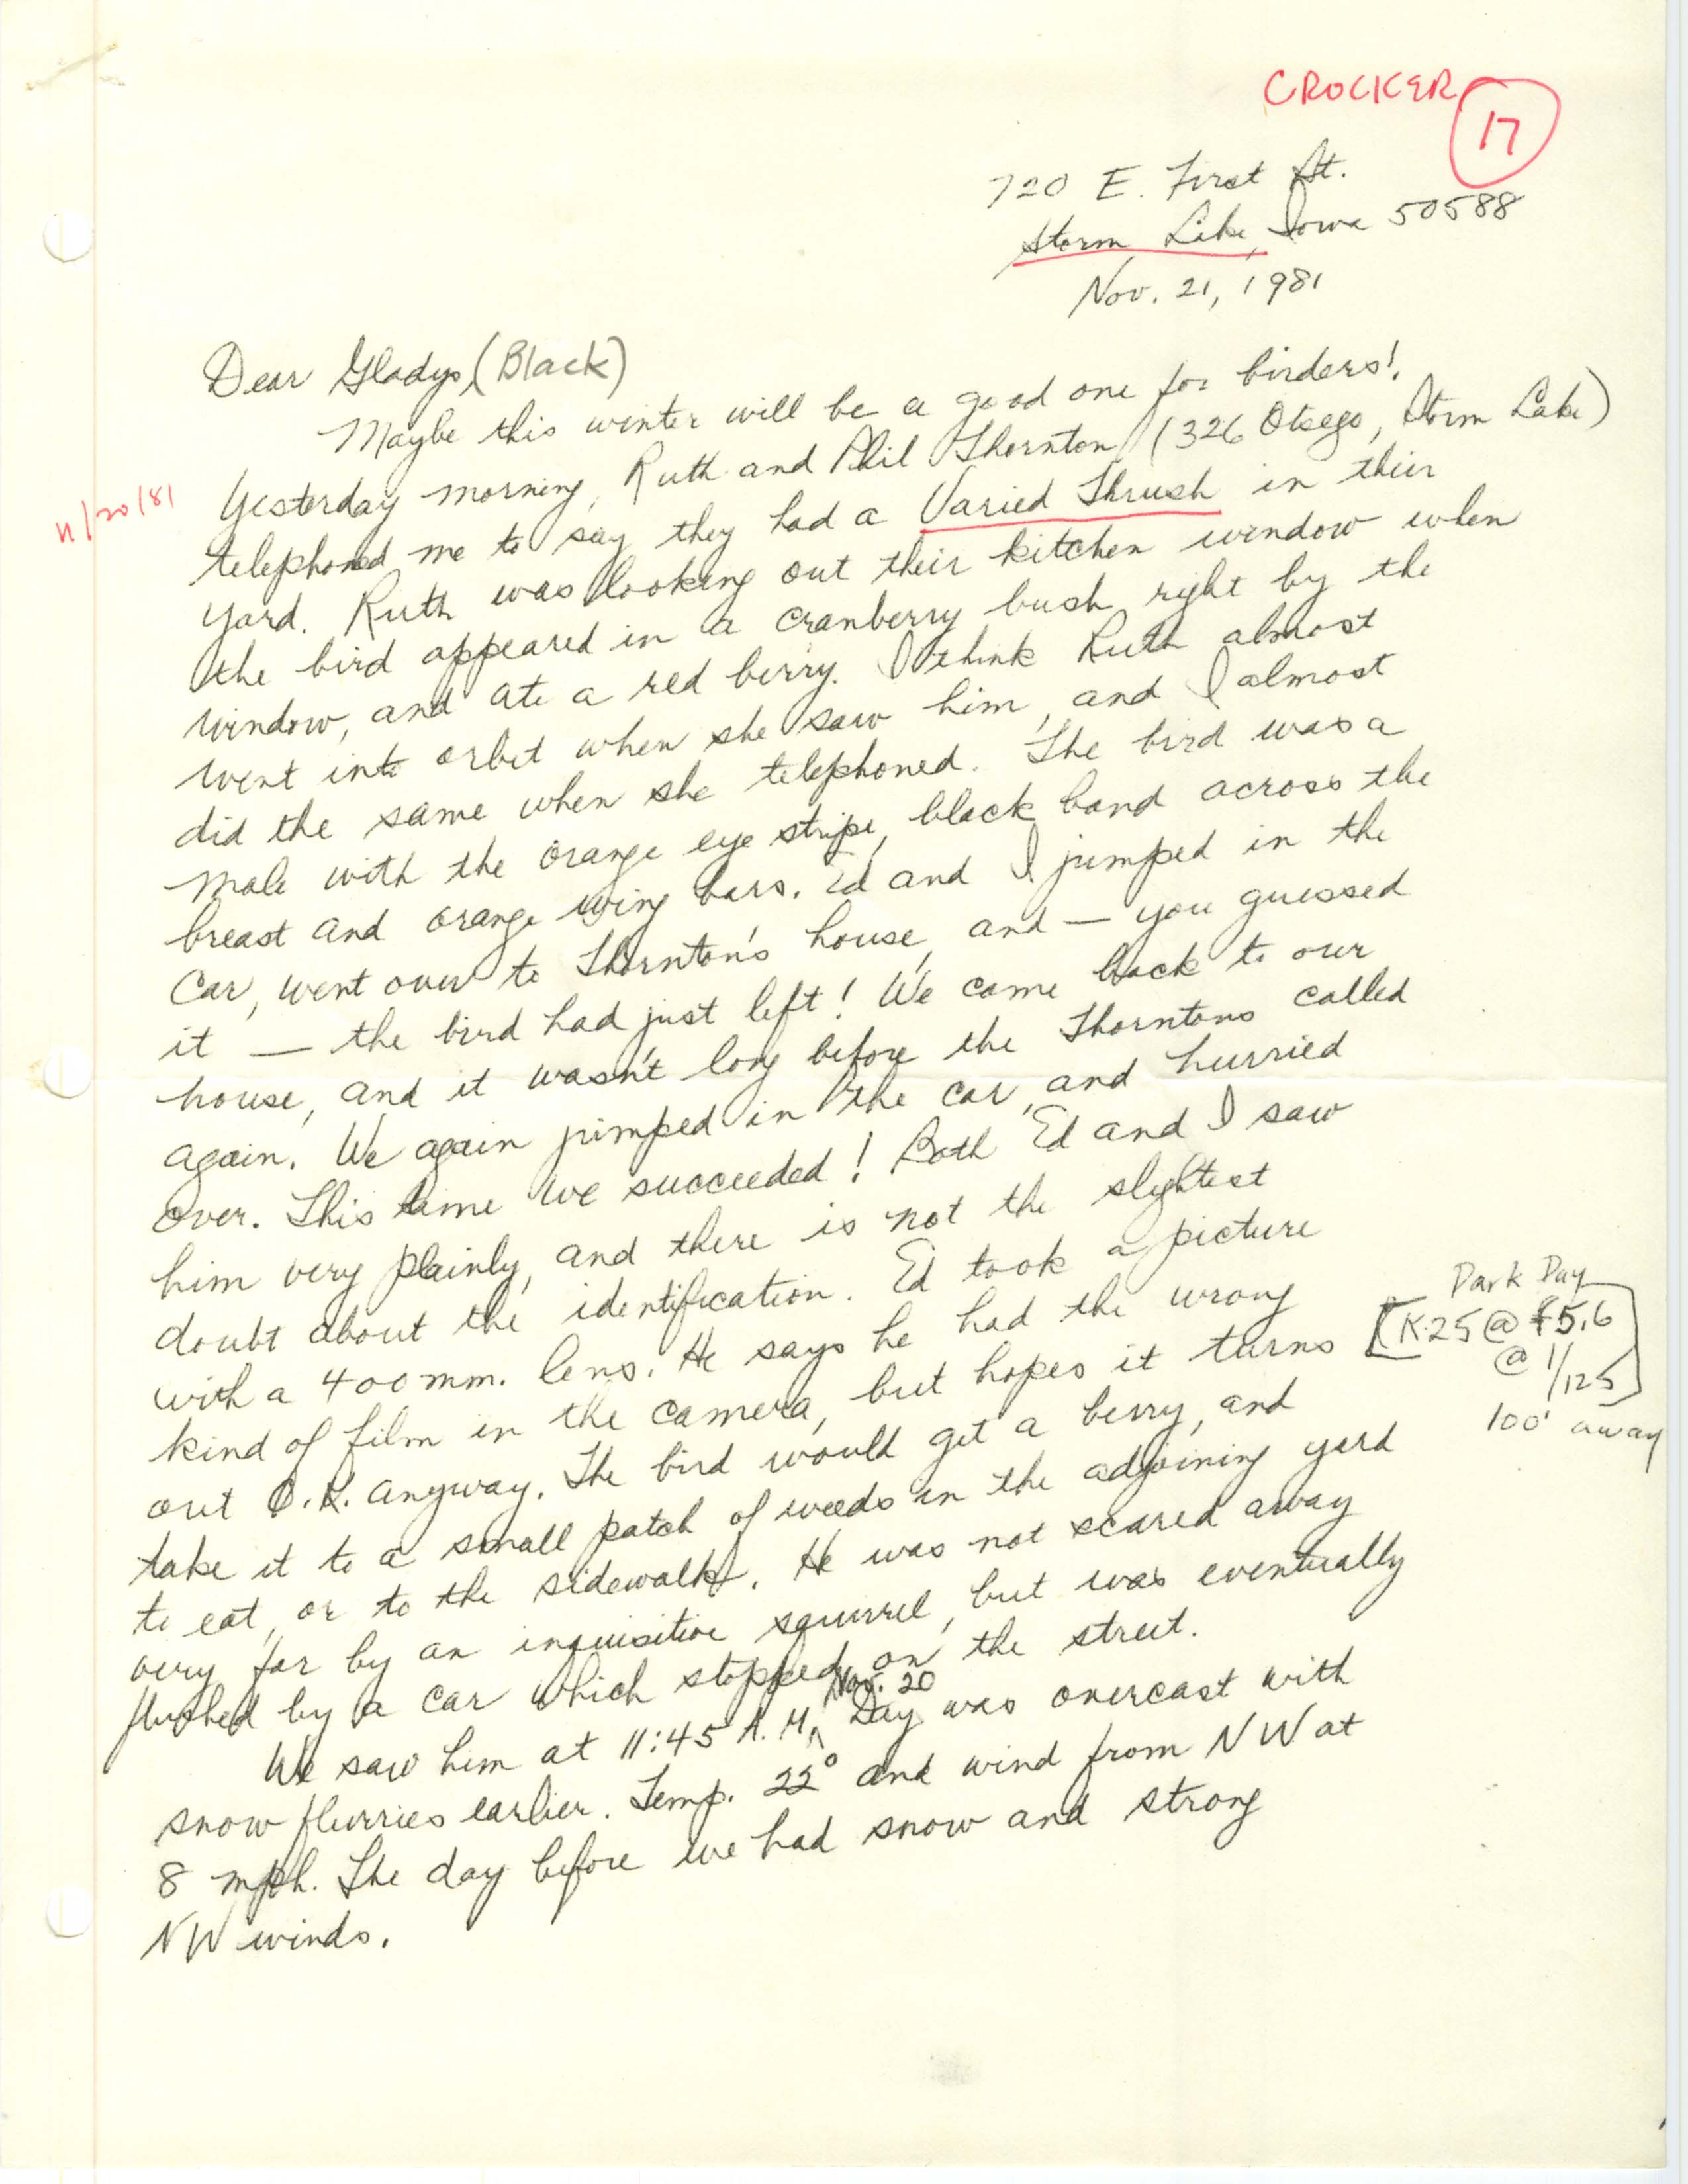 Virginia Crocker letter to Gladys Black regarding the sighting of a Varied Thrush at Storm Lake, November 21, 1981